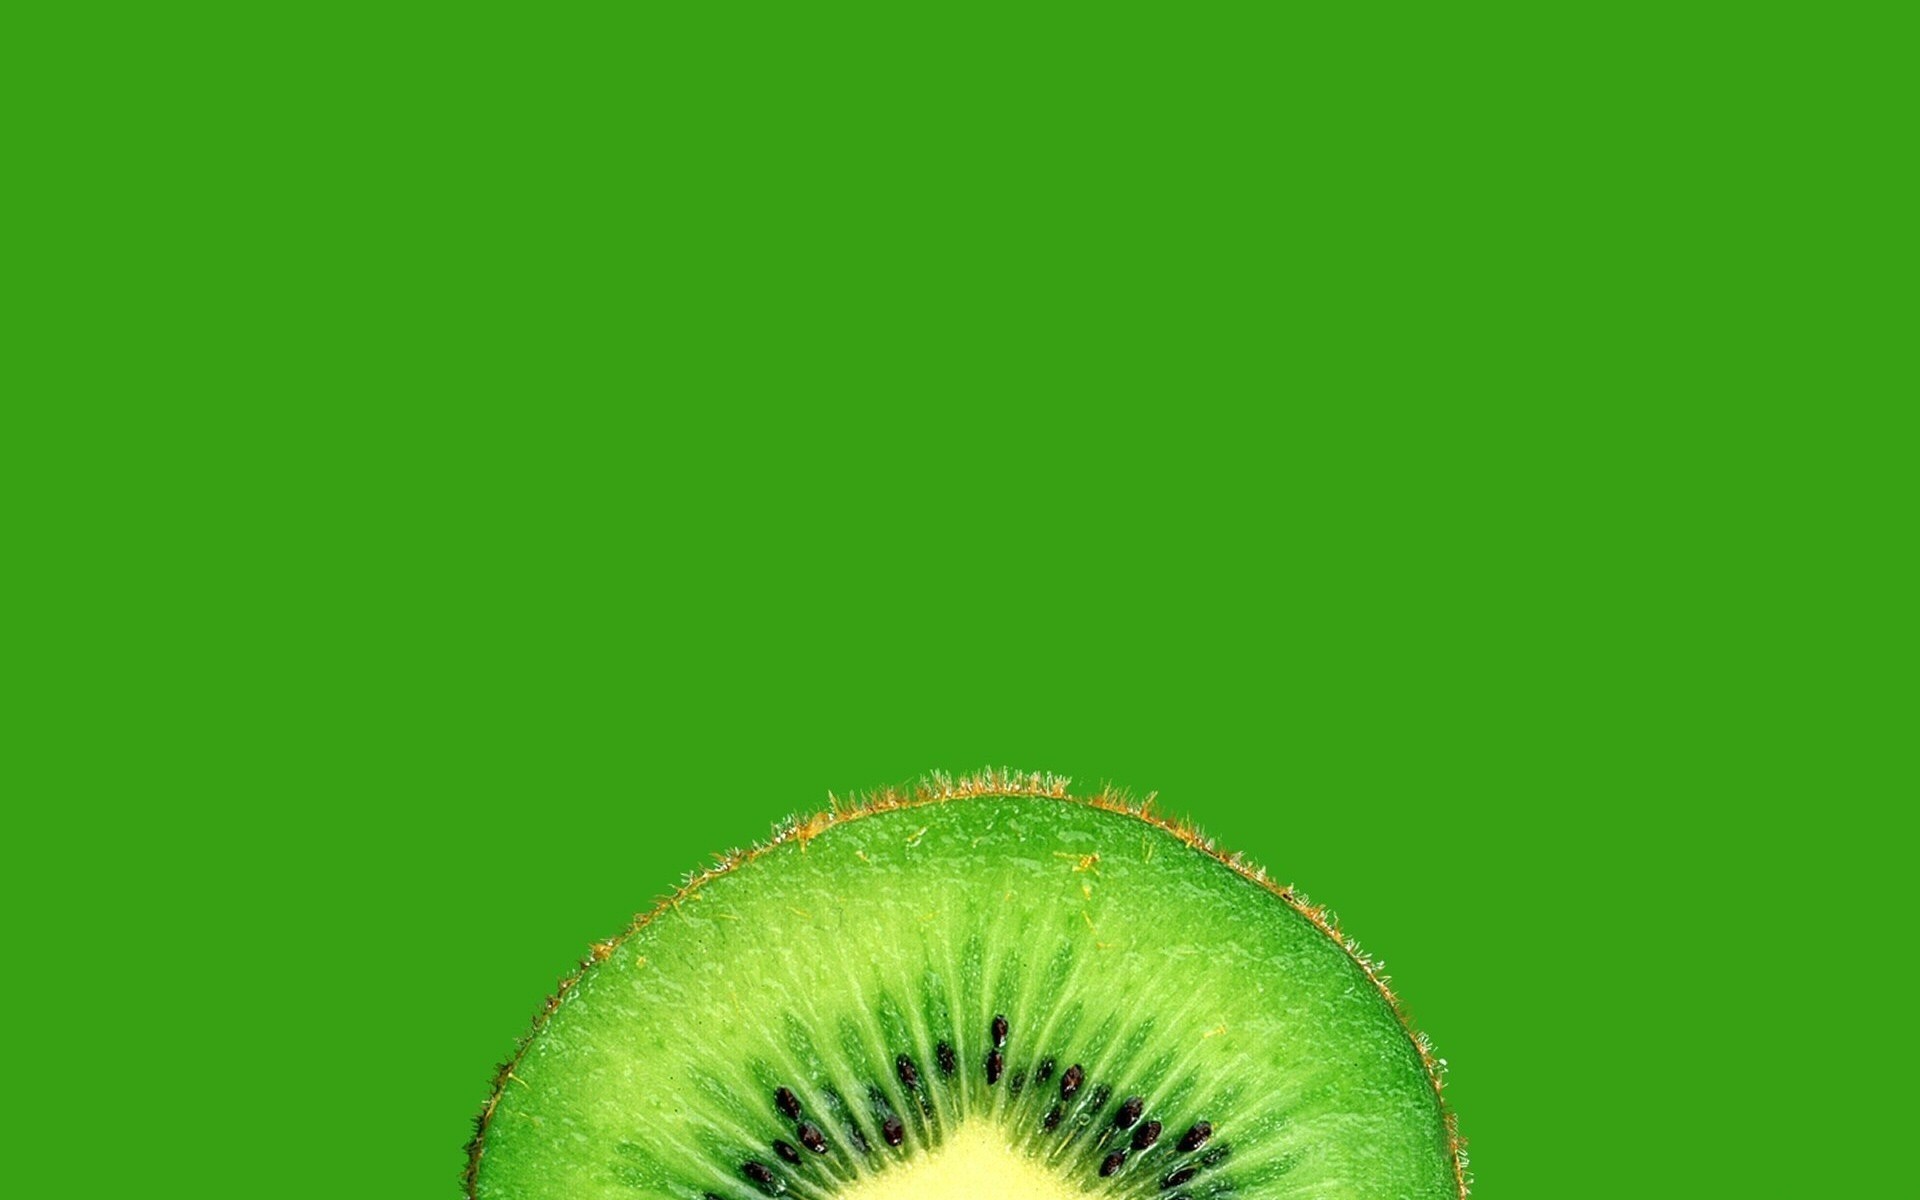 kiwi wallpaper,kiwifruit,green,leaf,close up,plant